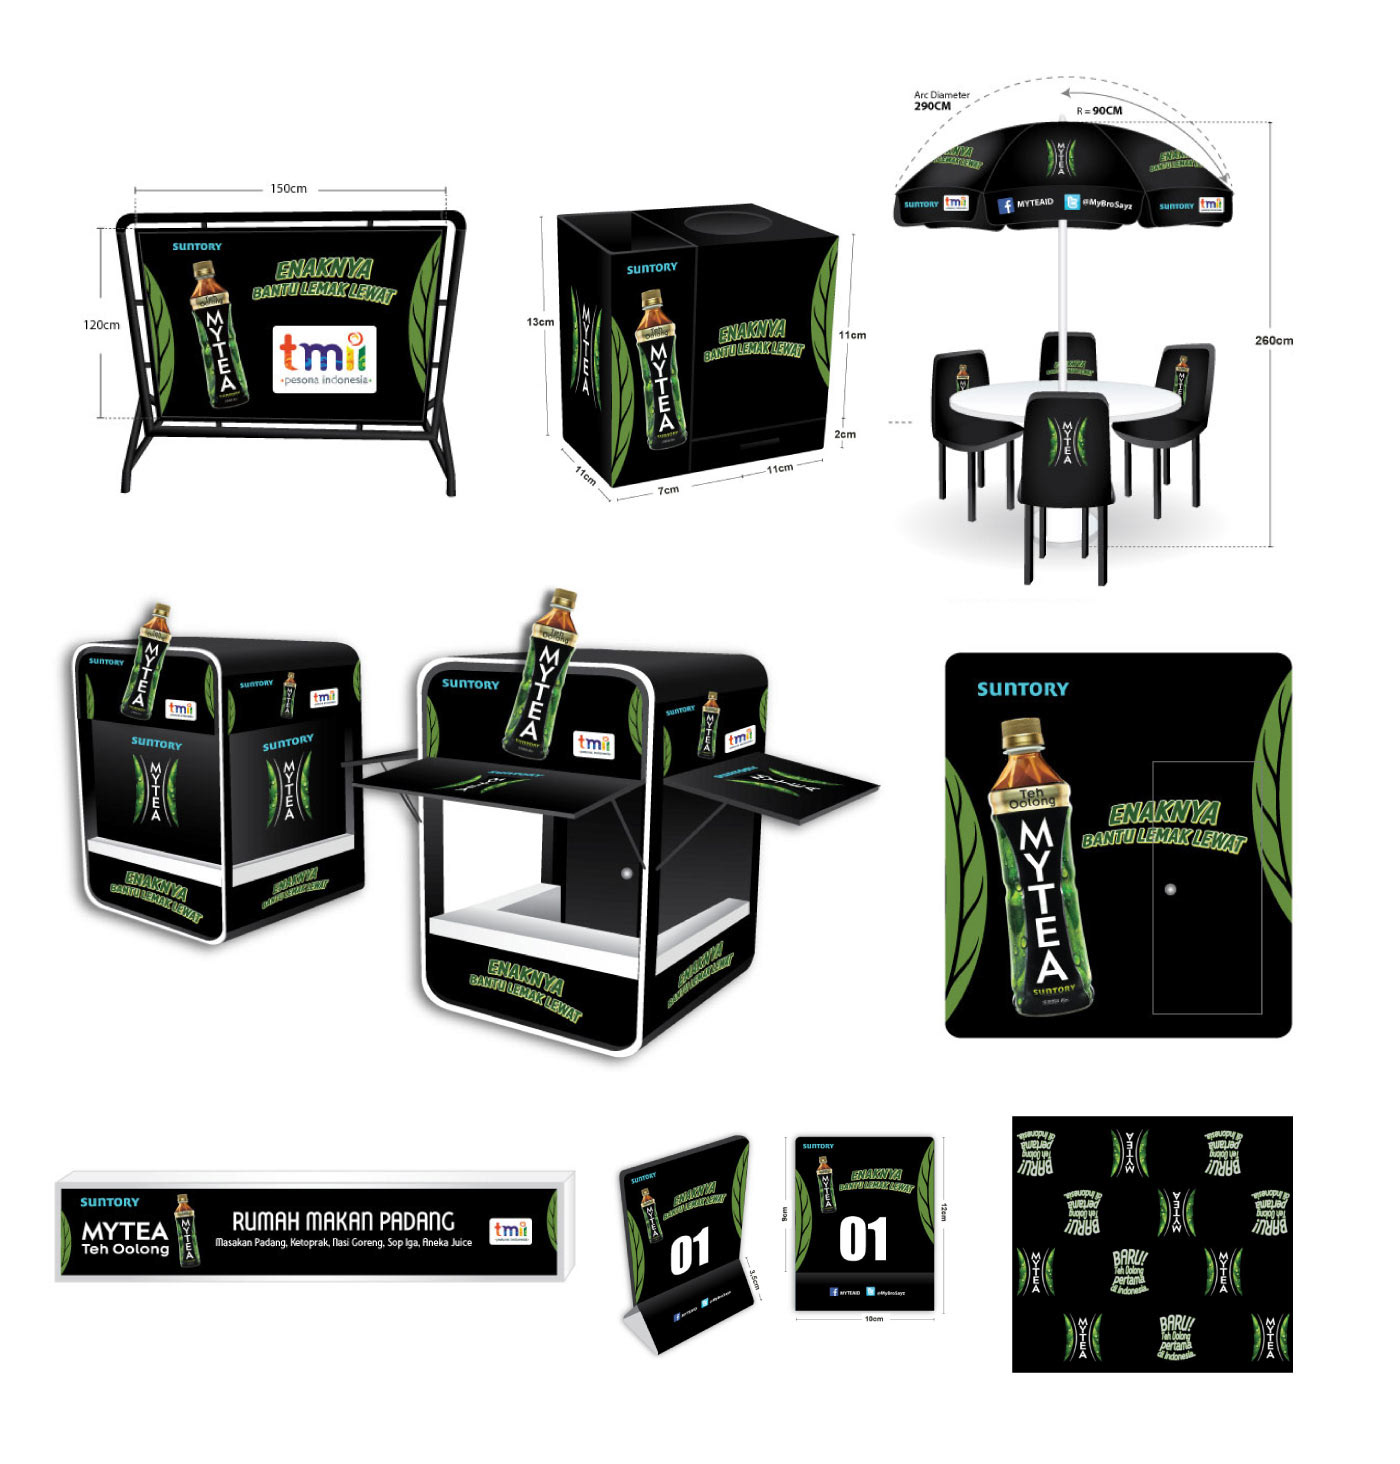 Advertising  branding  kiosk design parasol design product design  Promotional media visual identity